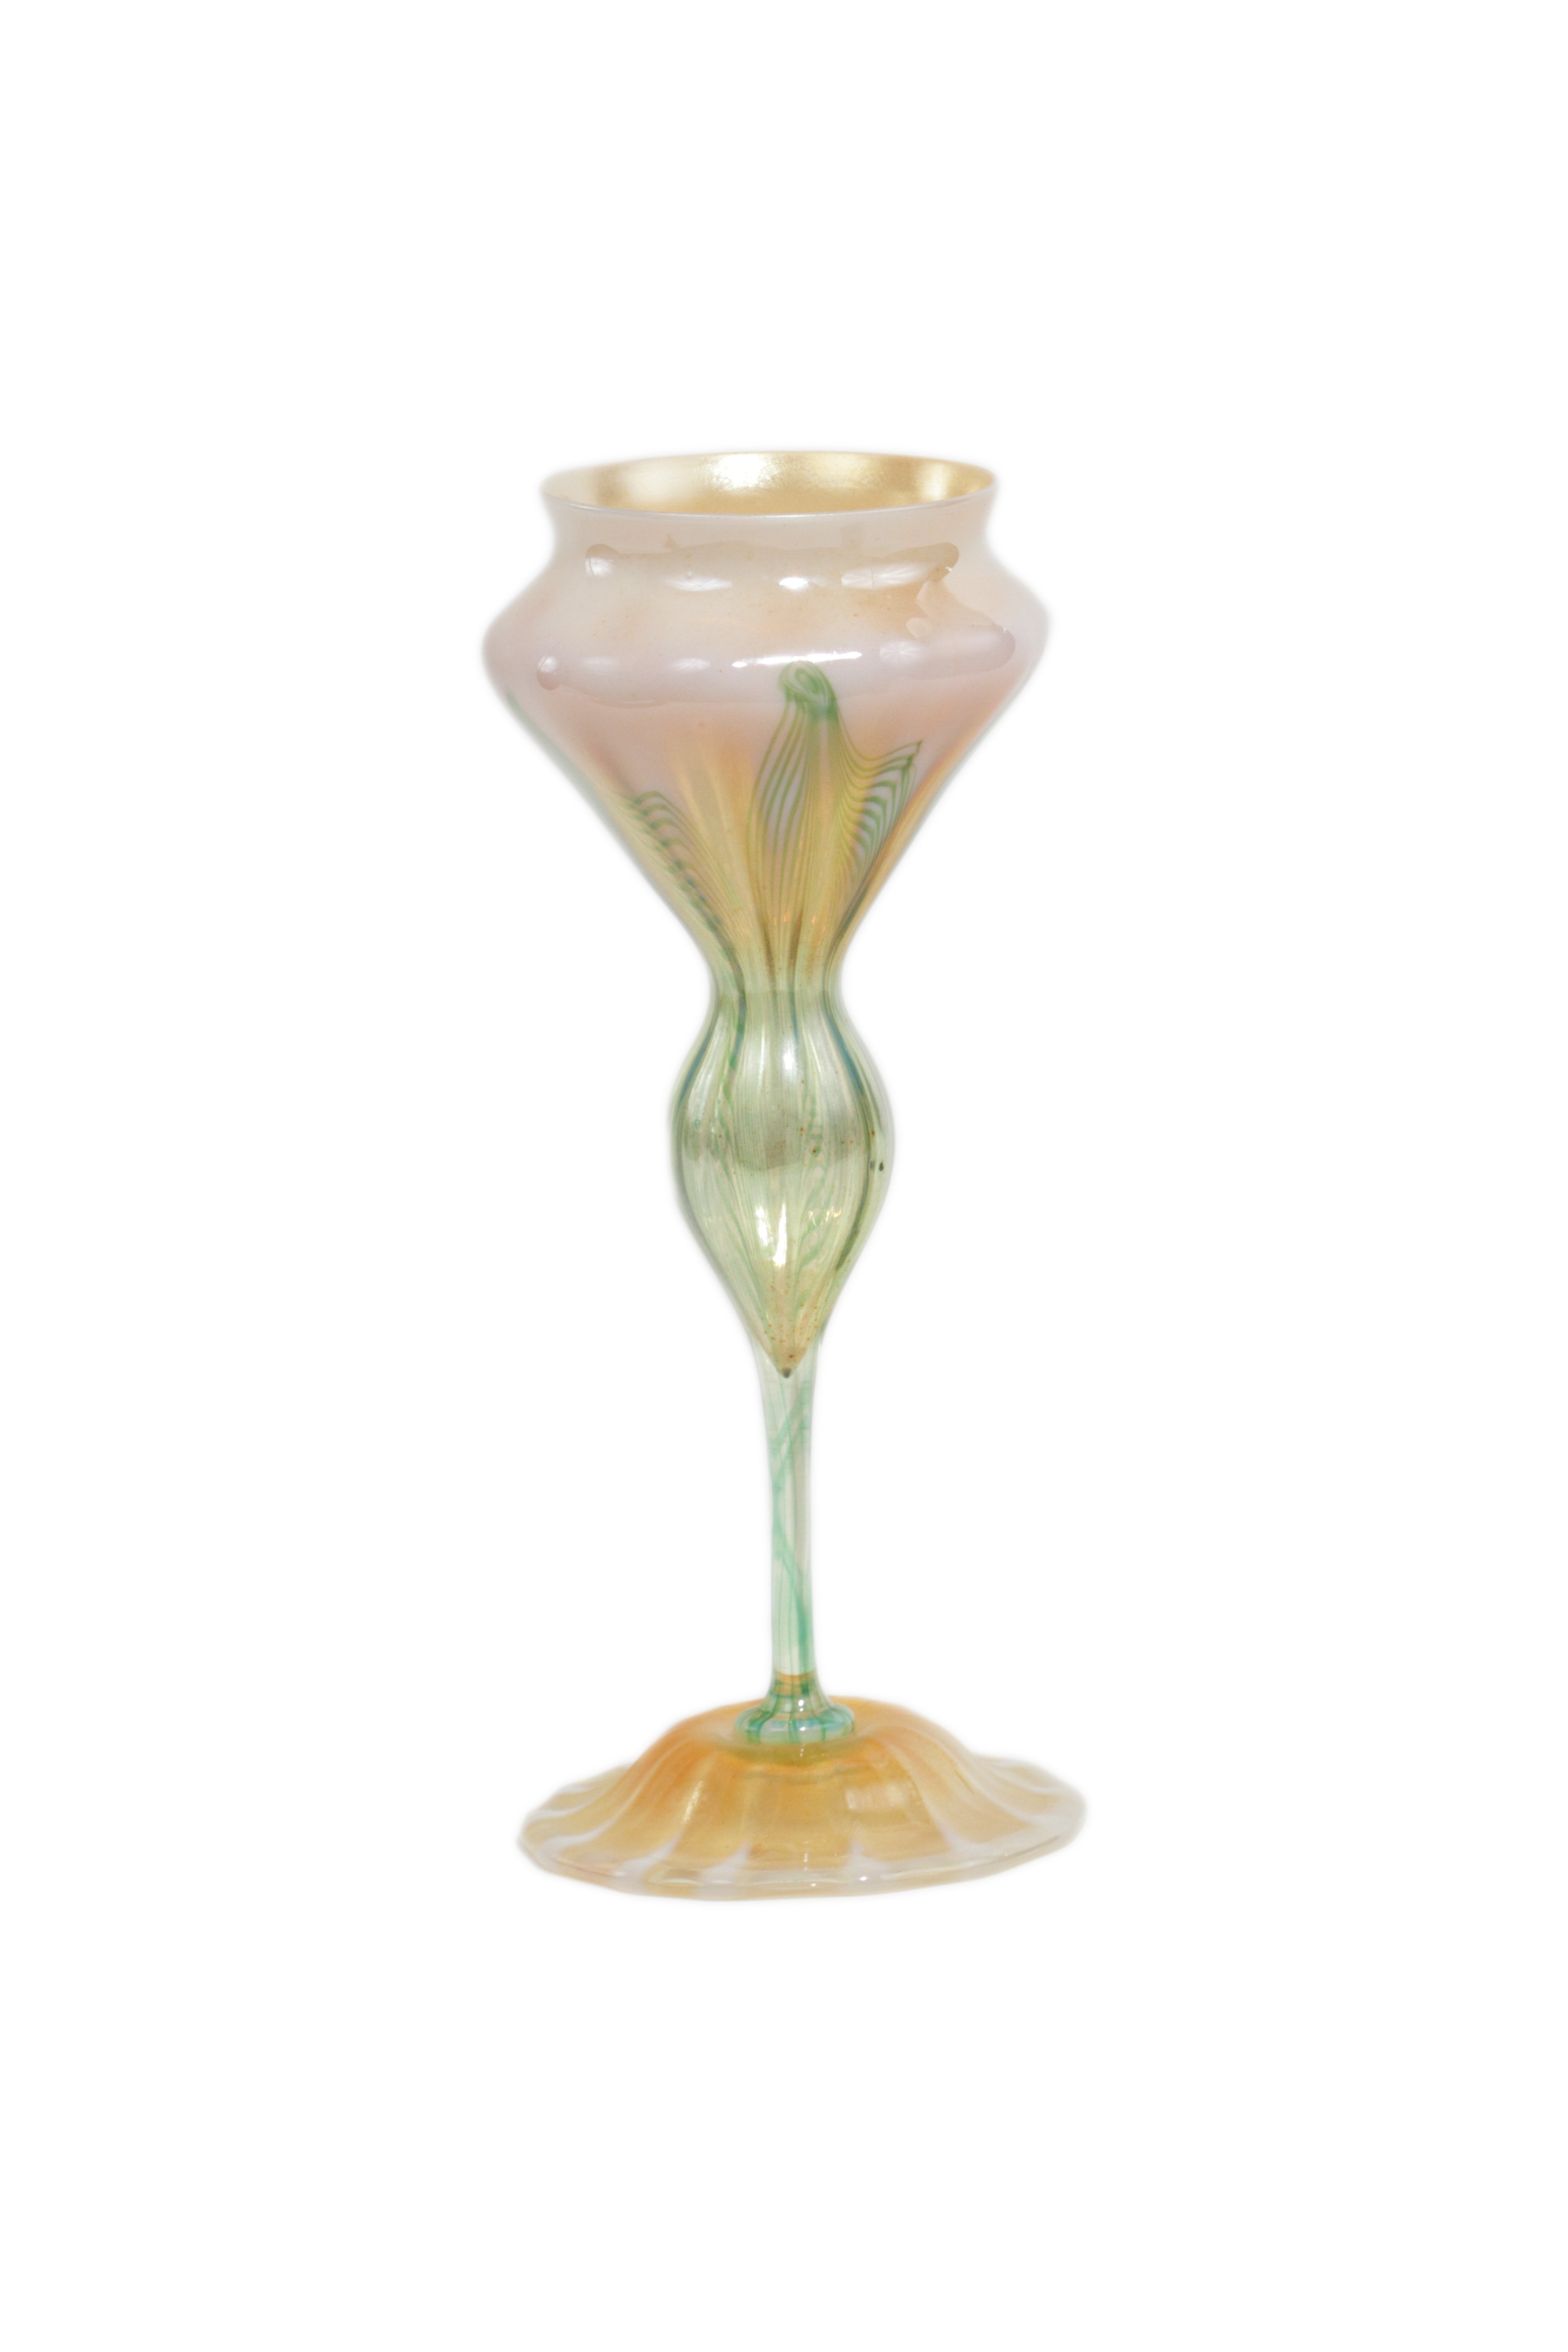 An Art Nouveau Tiffany Favrile Decorated Flower Form Vase